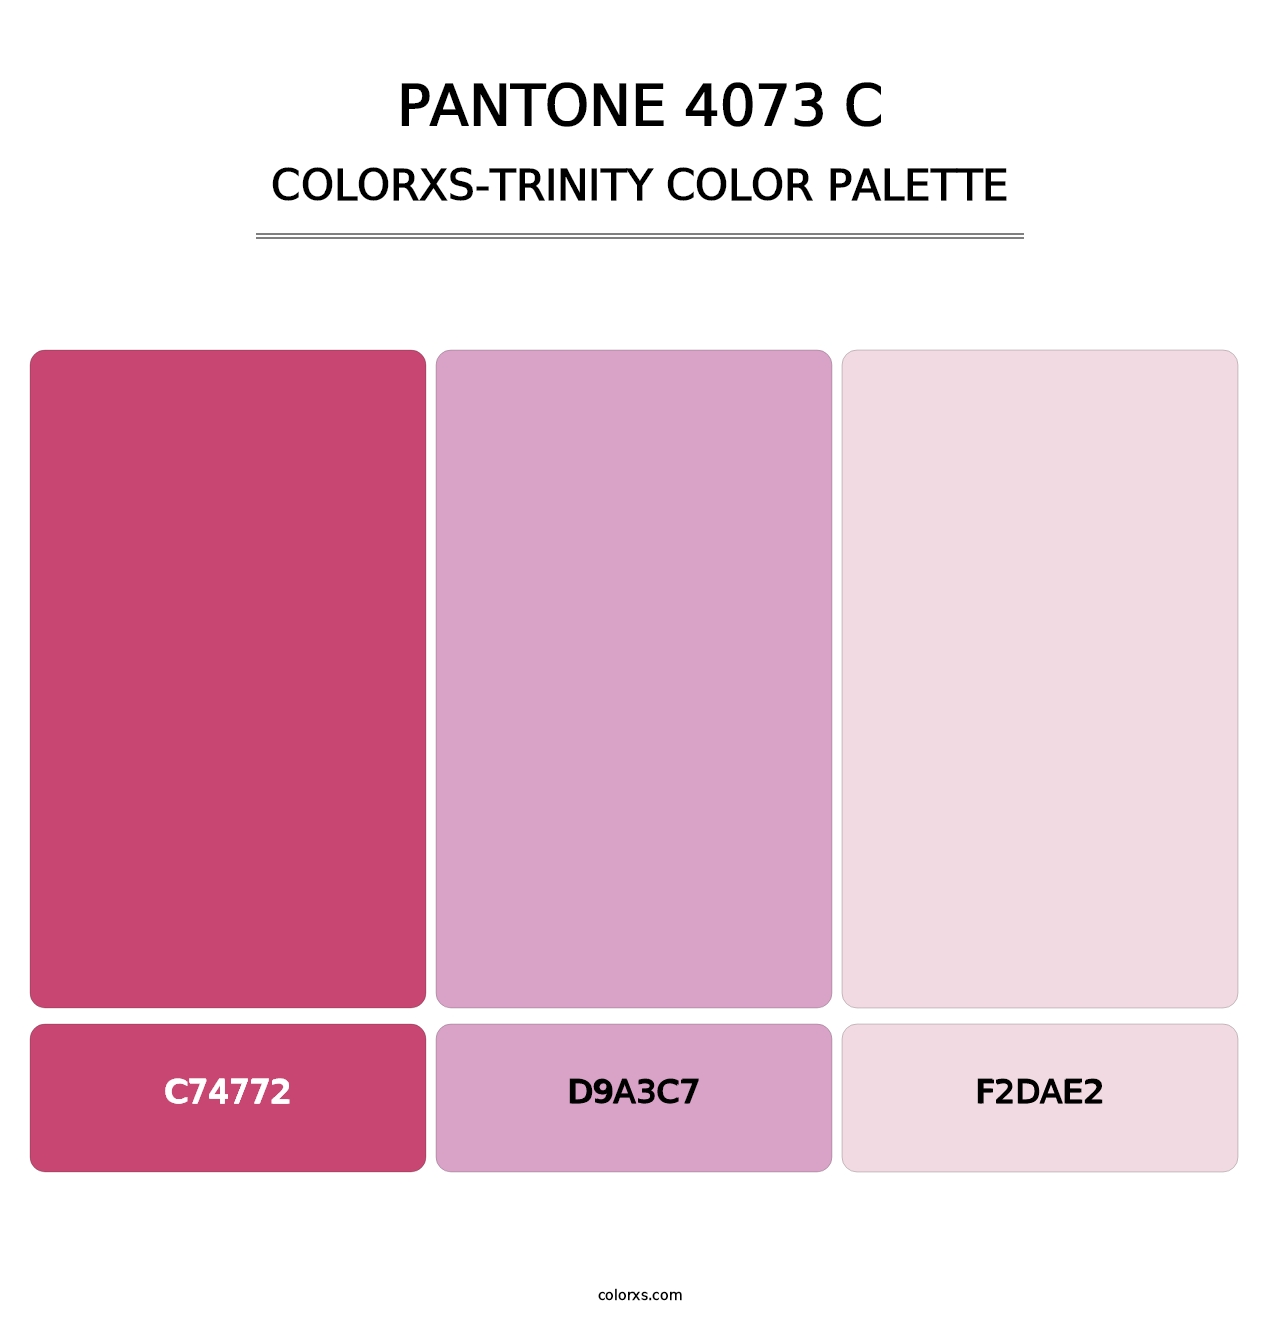 PANTONE 4073 C - Colorxs Trinity Palette